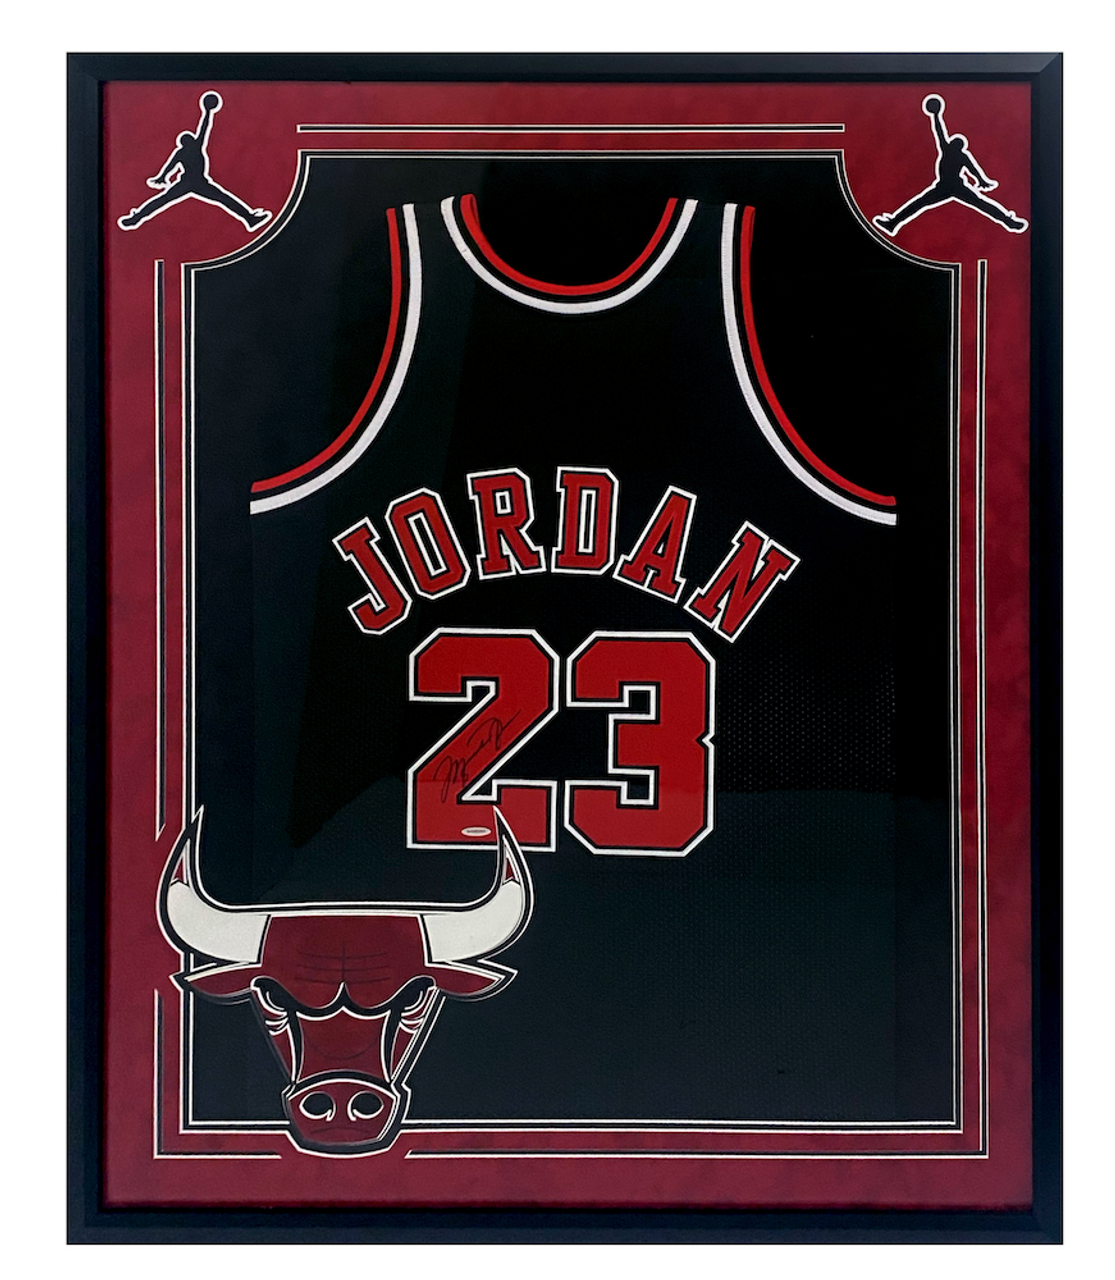 Michael Jordan Autographed 1994-95 Chicago Bulls White